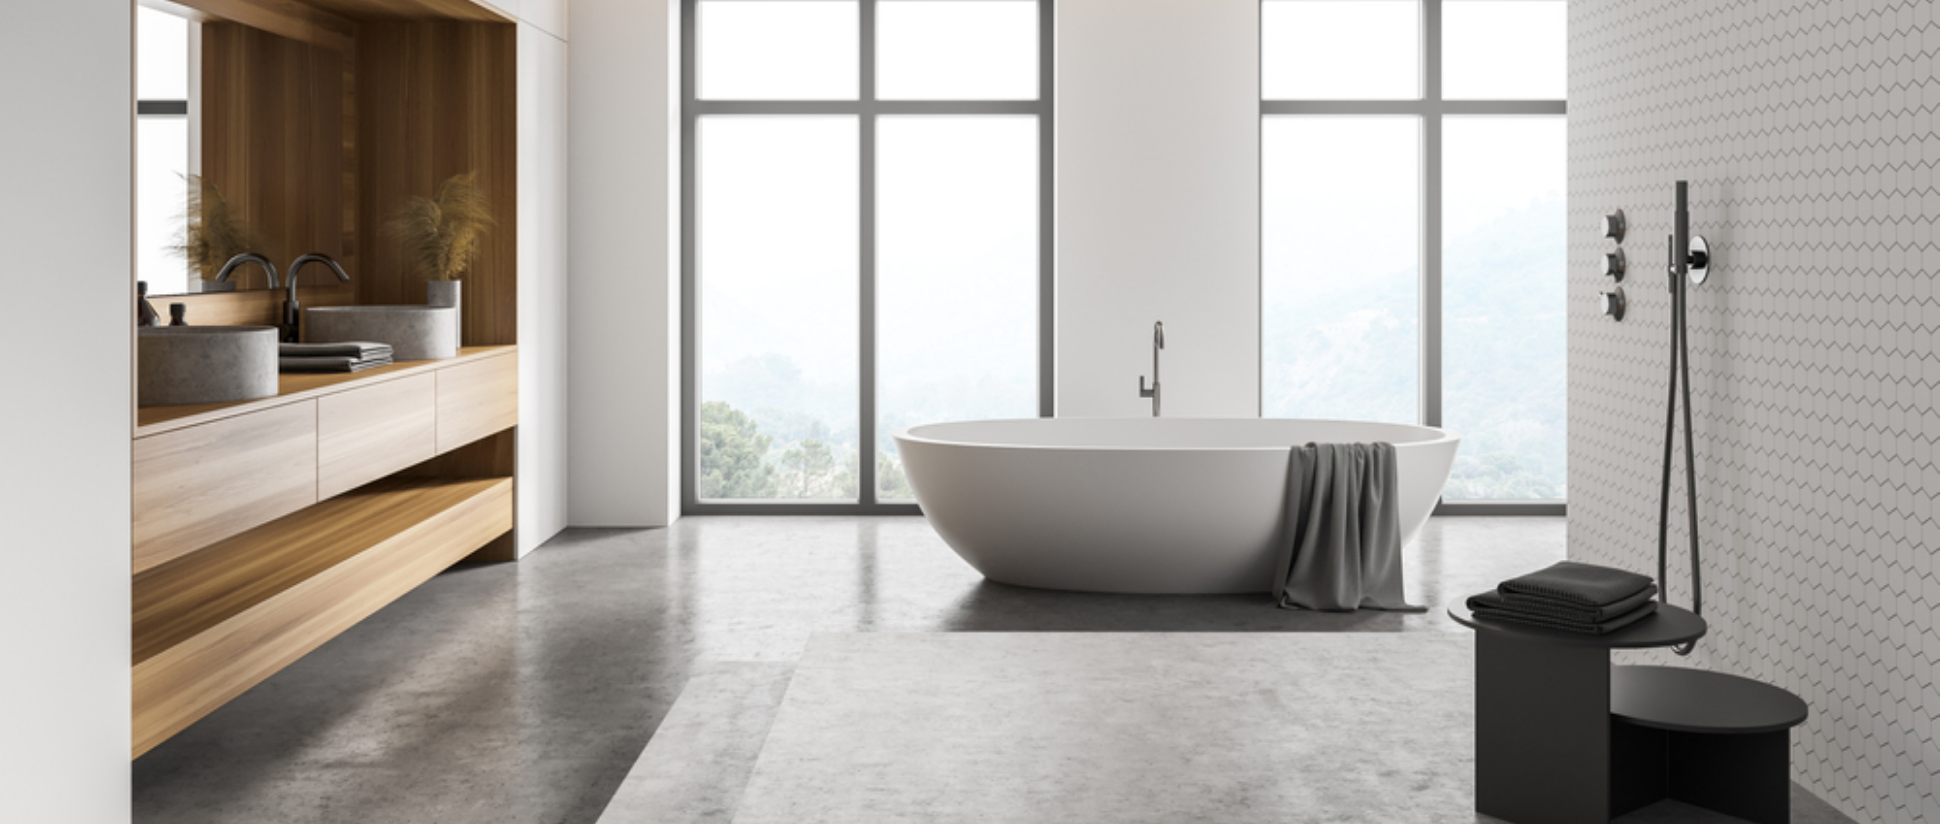 Bathroom Styling Guide: Make your bathroom renovations shine